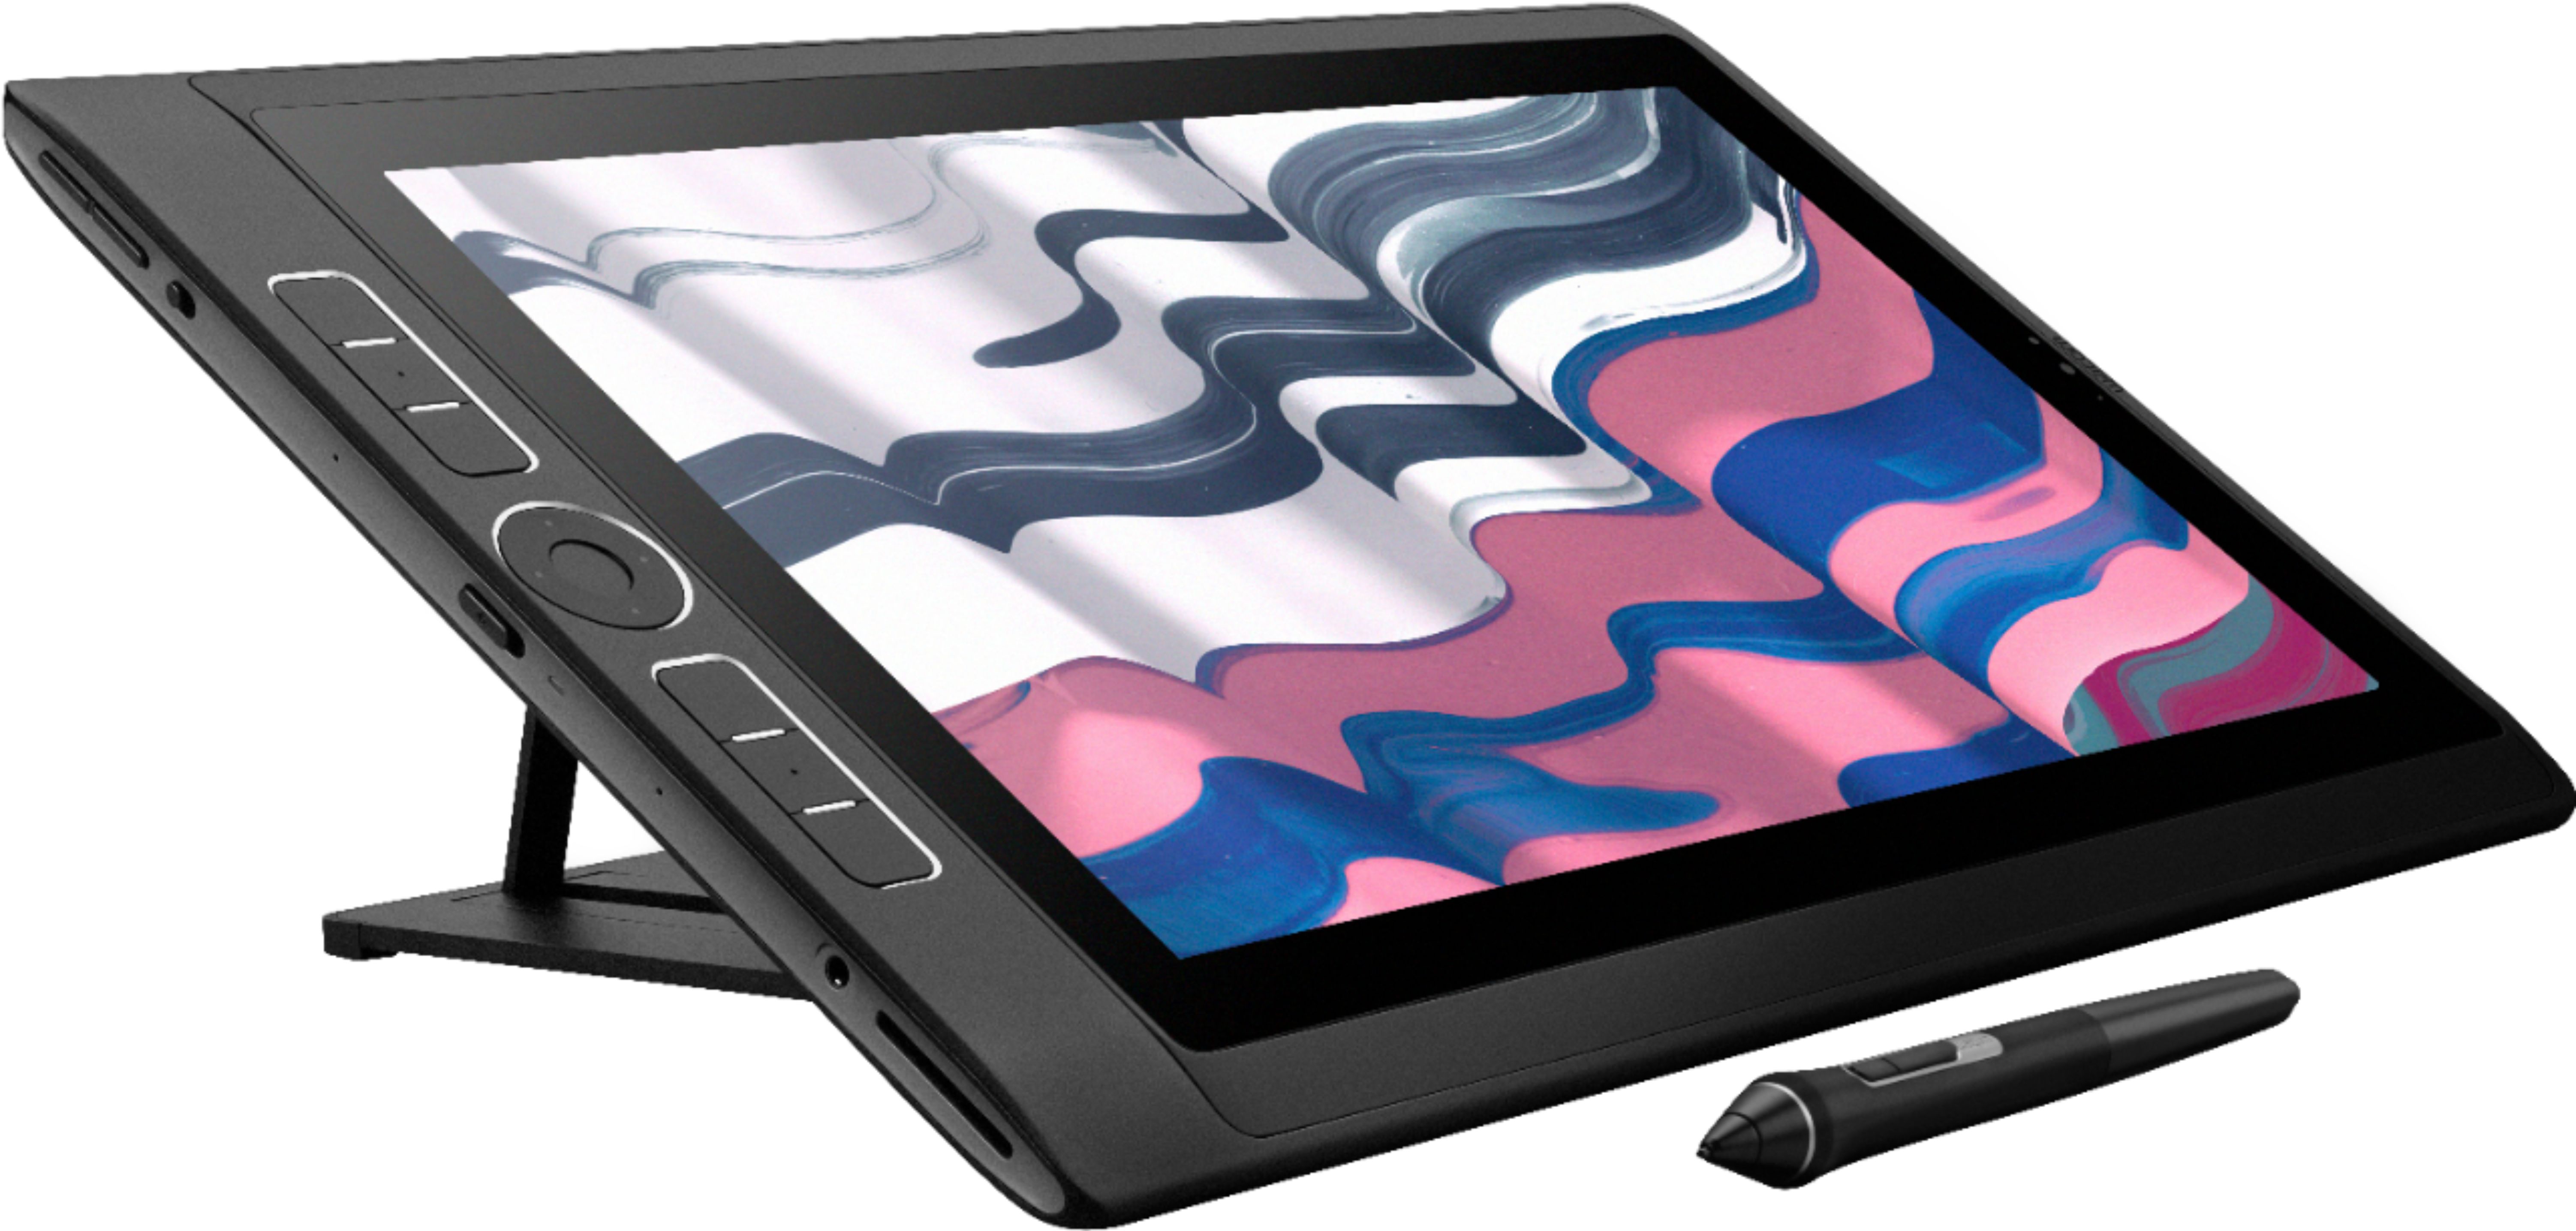 Wacom - MobileStudio Pro - 13.3" - Drawing Tablet - 512GB Storage